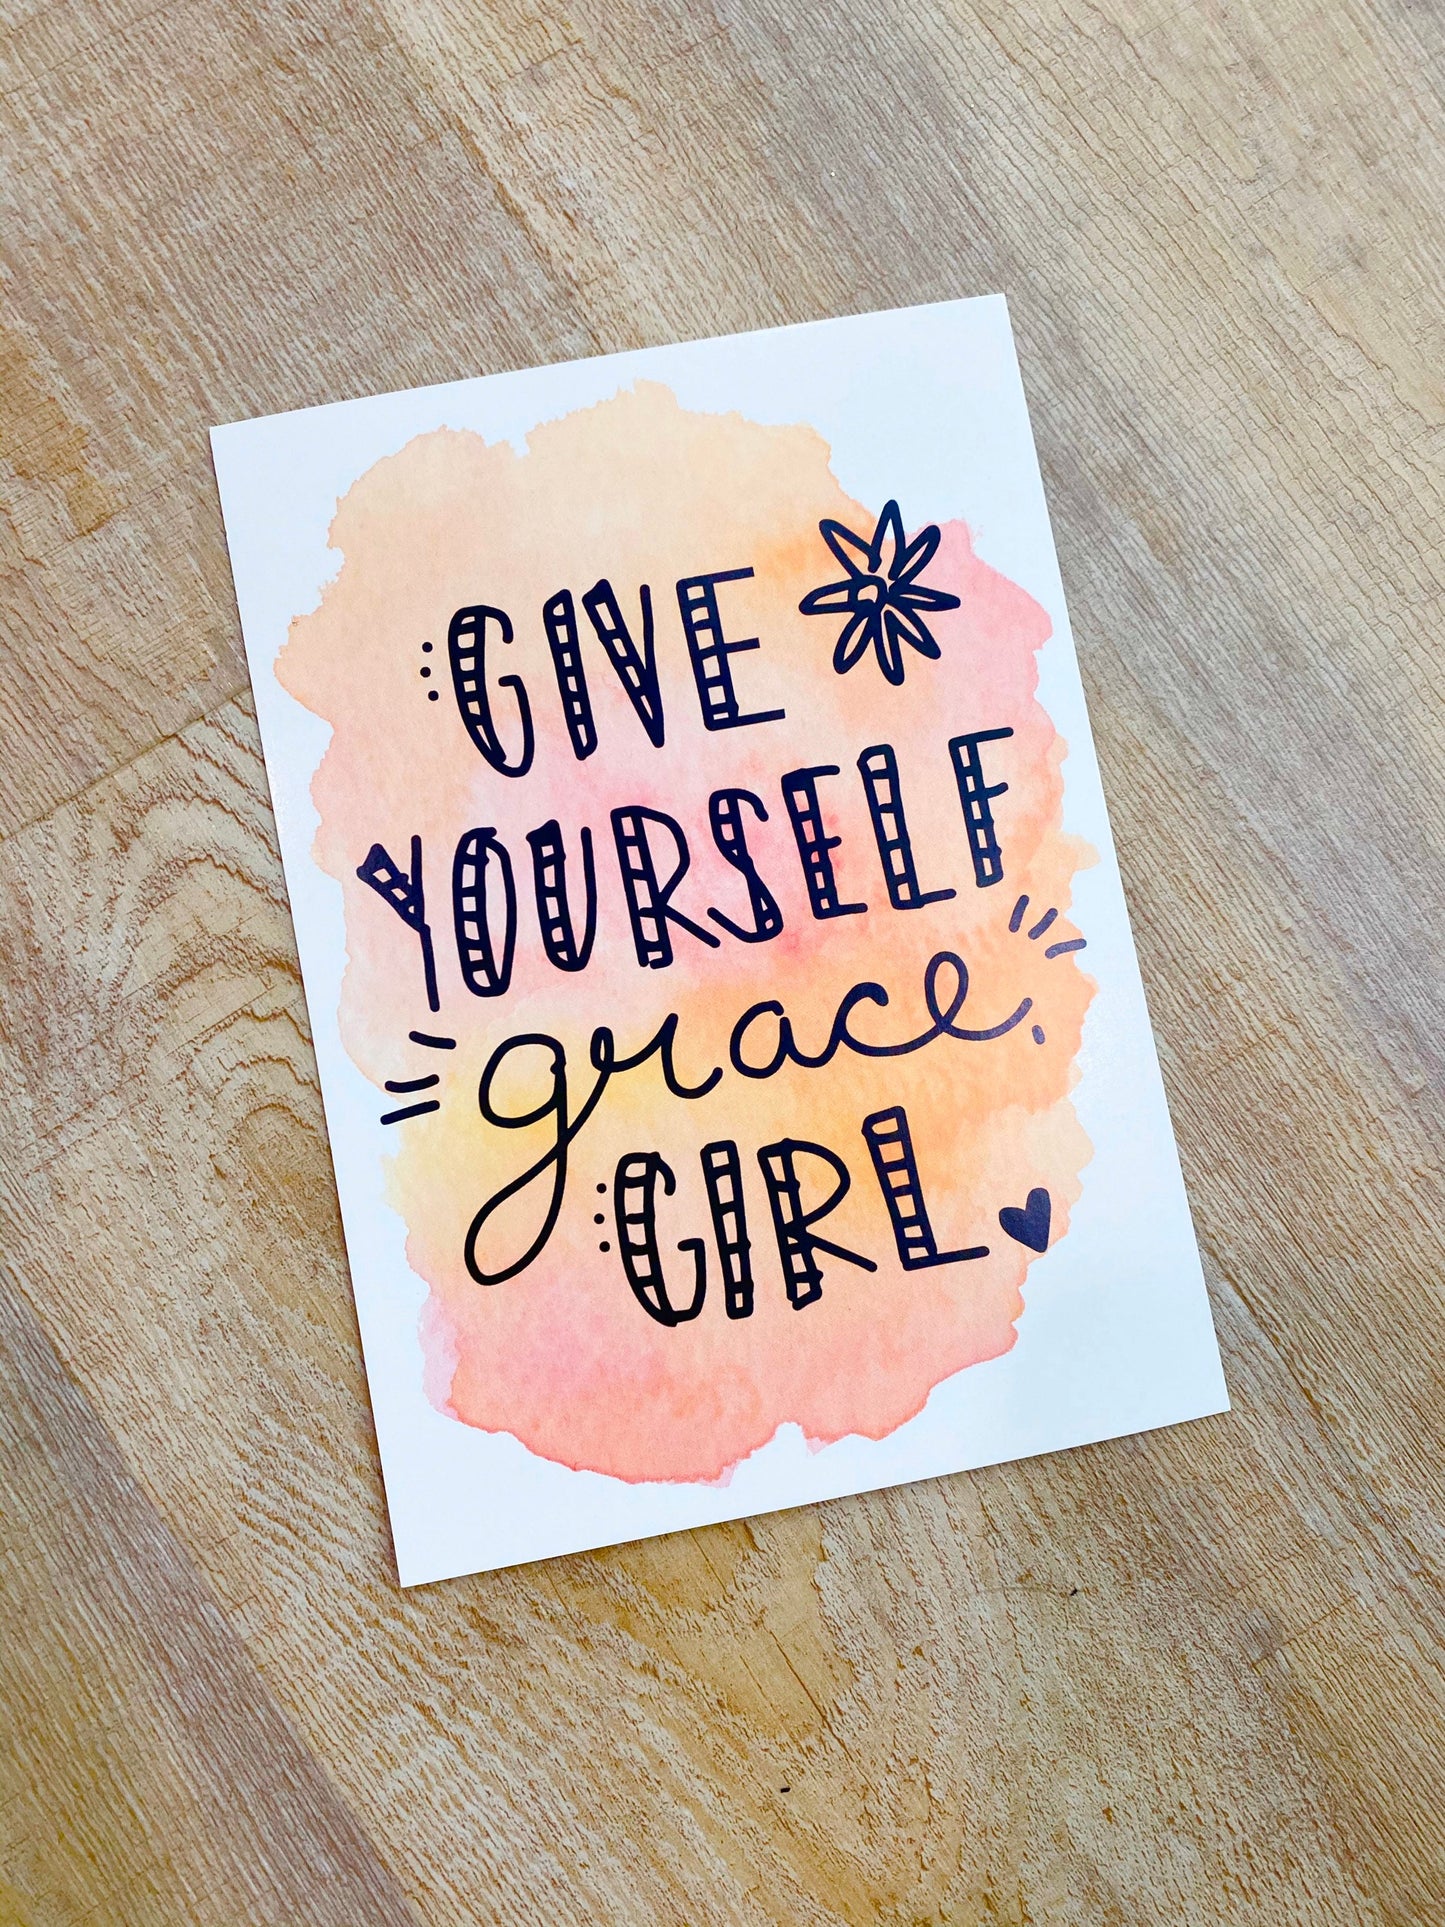 Art Print - Give Yourself Grace Girl!